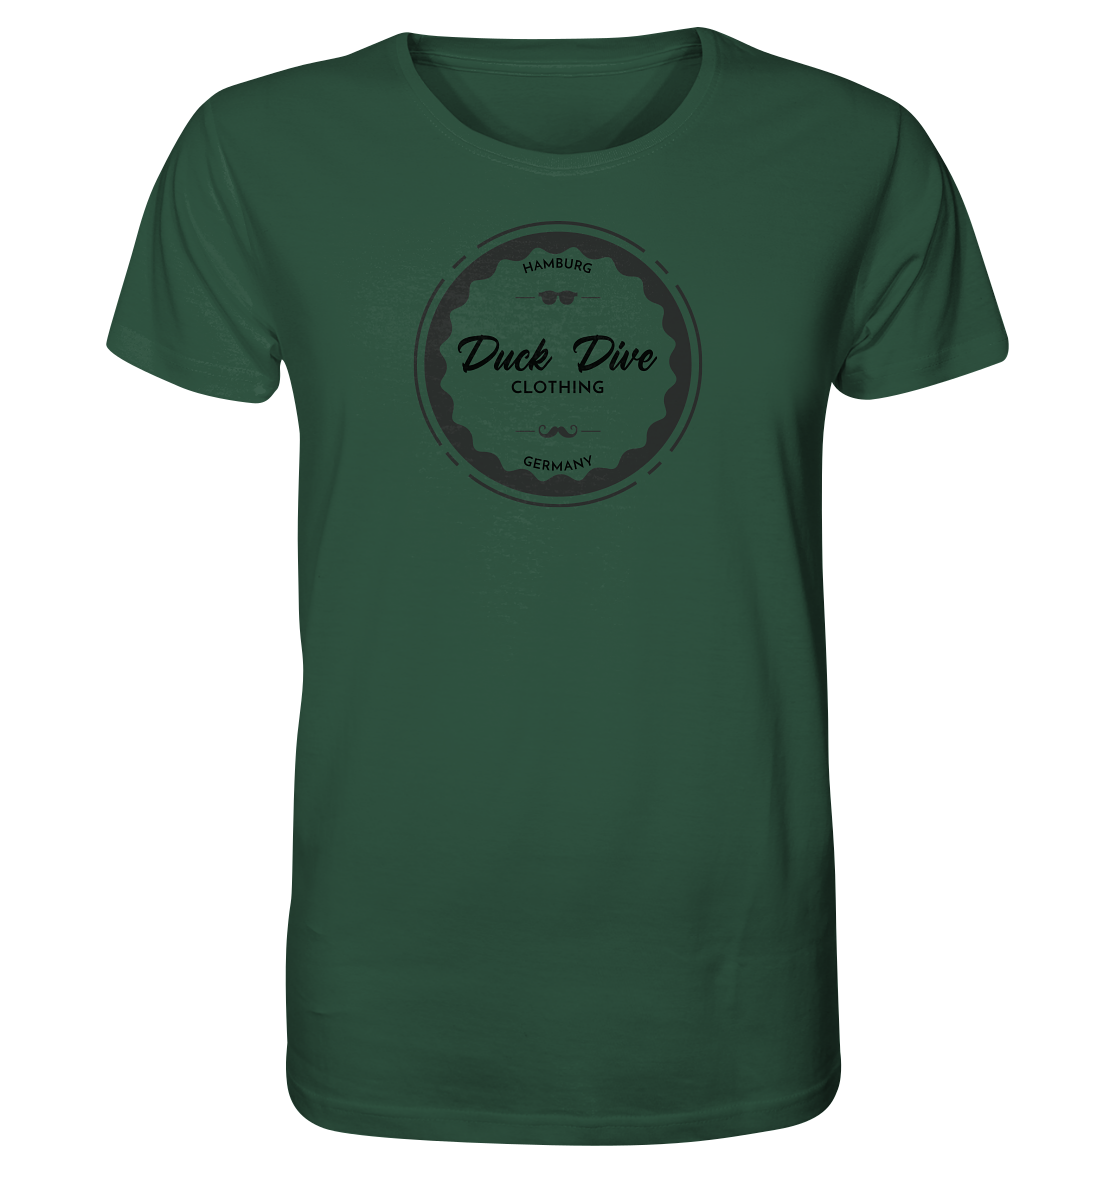 Shirt - Round Logo Brand - Organic Shirt - Duck Dive Clothing